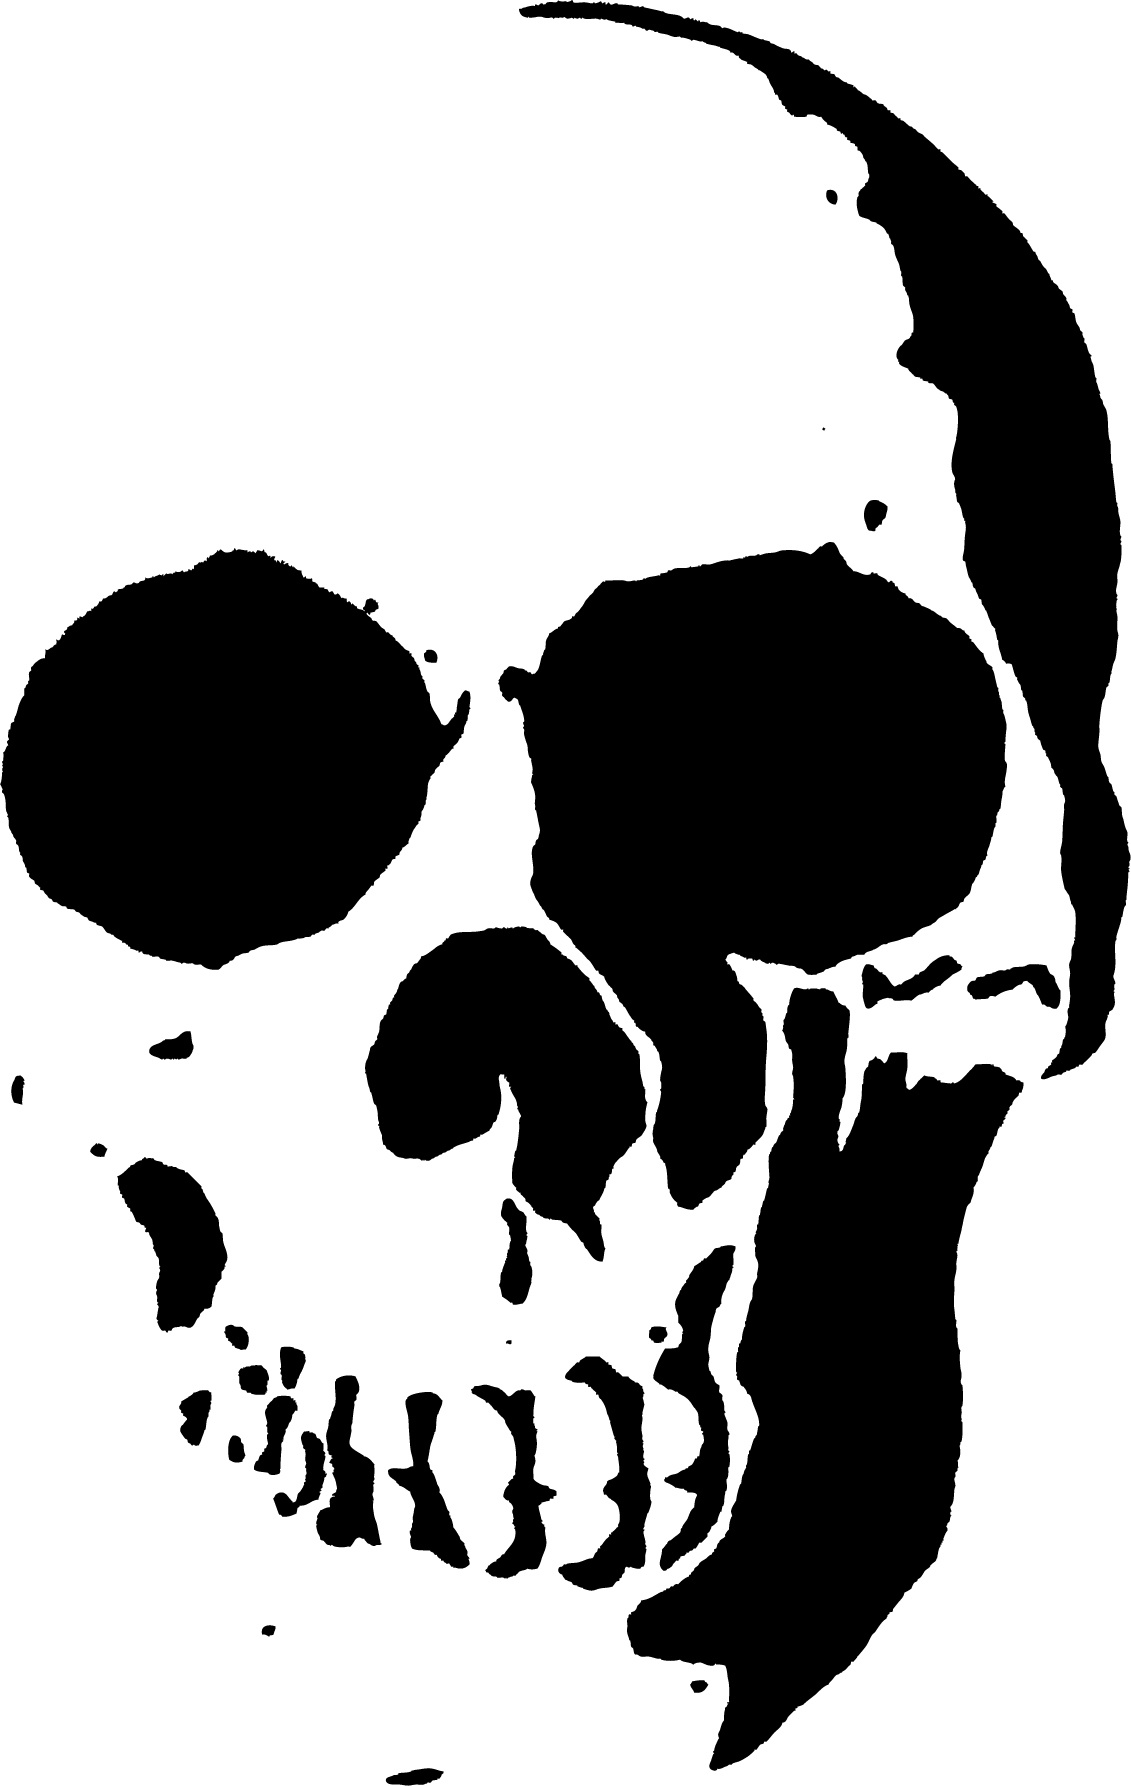 23 Free Skull Stencil Printable Templates | Guide Patterns - Free Printable Stencil Designs